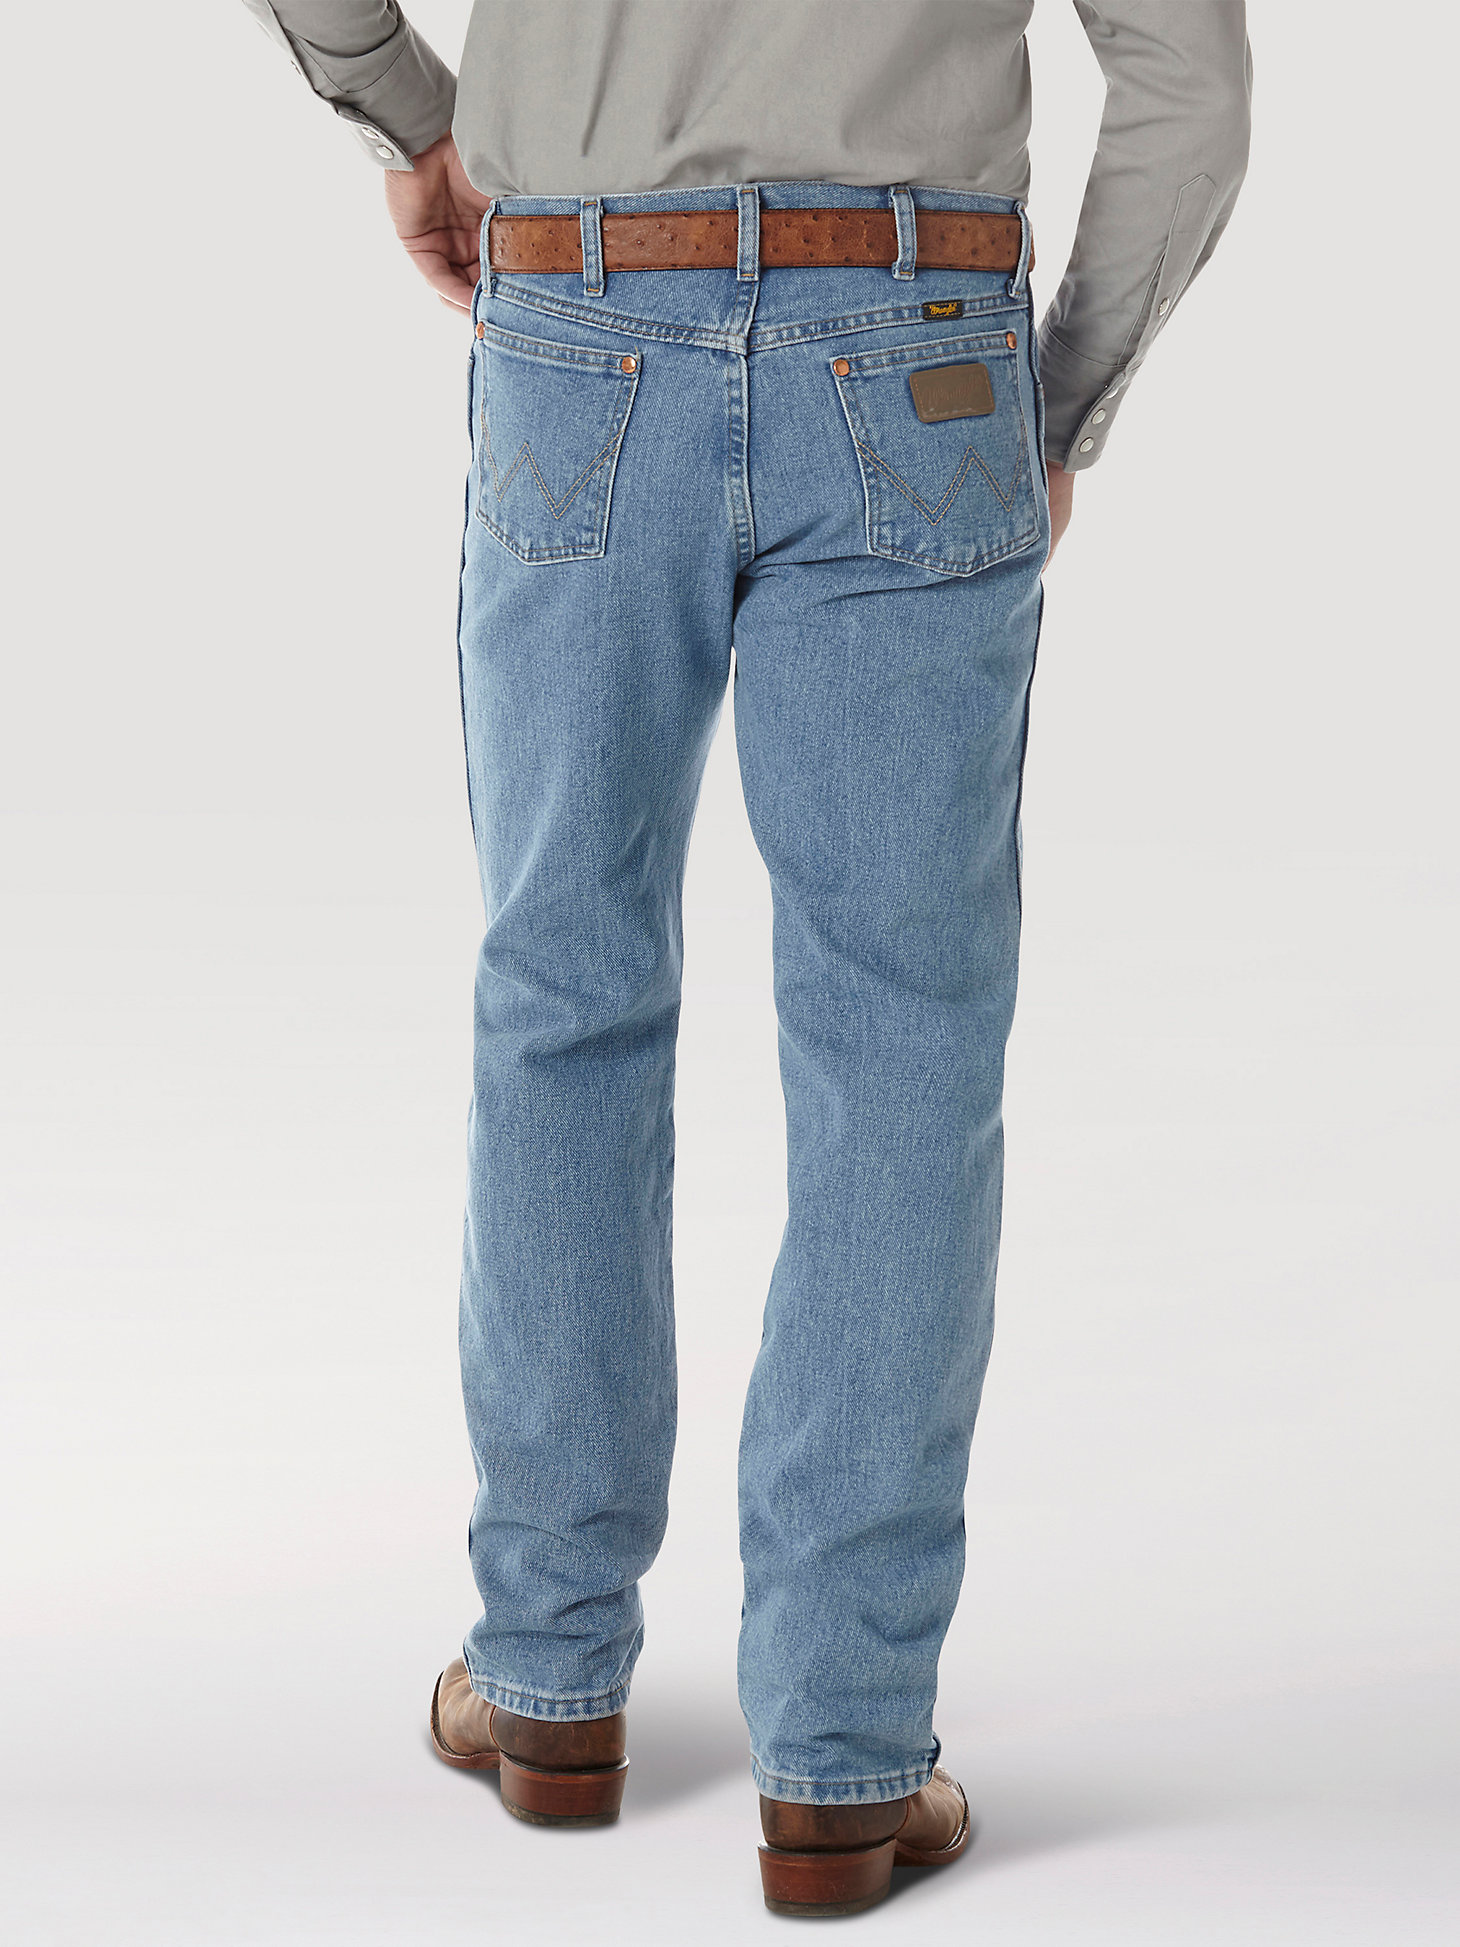 Wrangler® Cowboy Cut® Original Fit Jean in Antique Wash alternative view 8